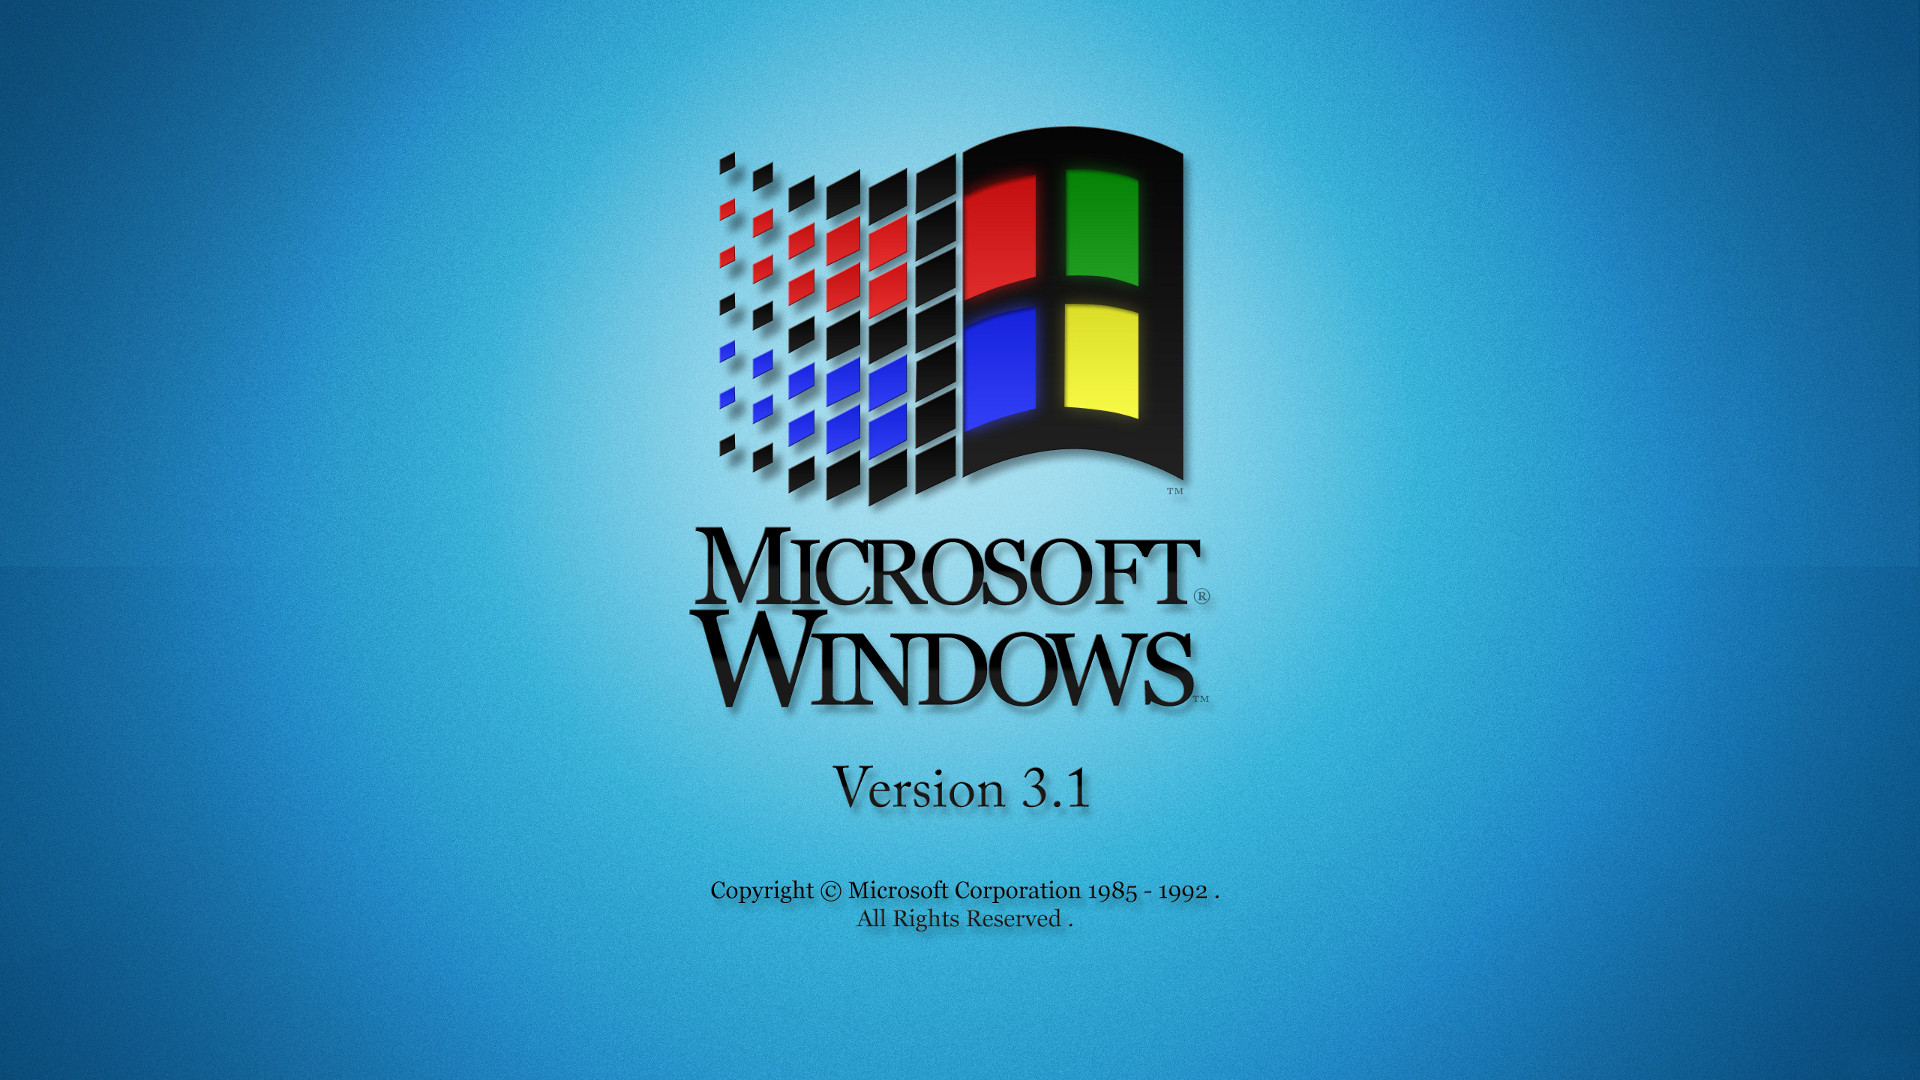 Microsoft Windows Version 3.1 desktop PC and Mac wallpaper